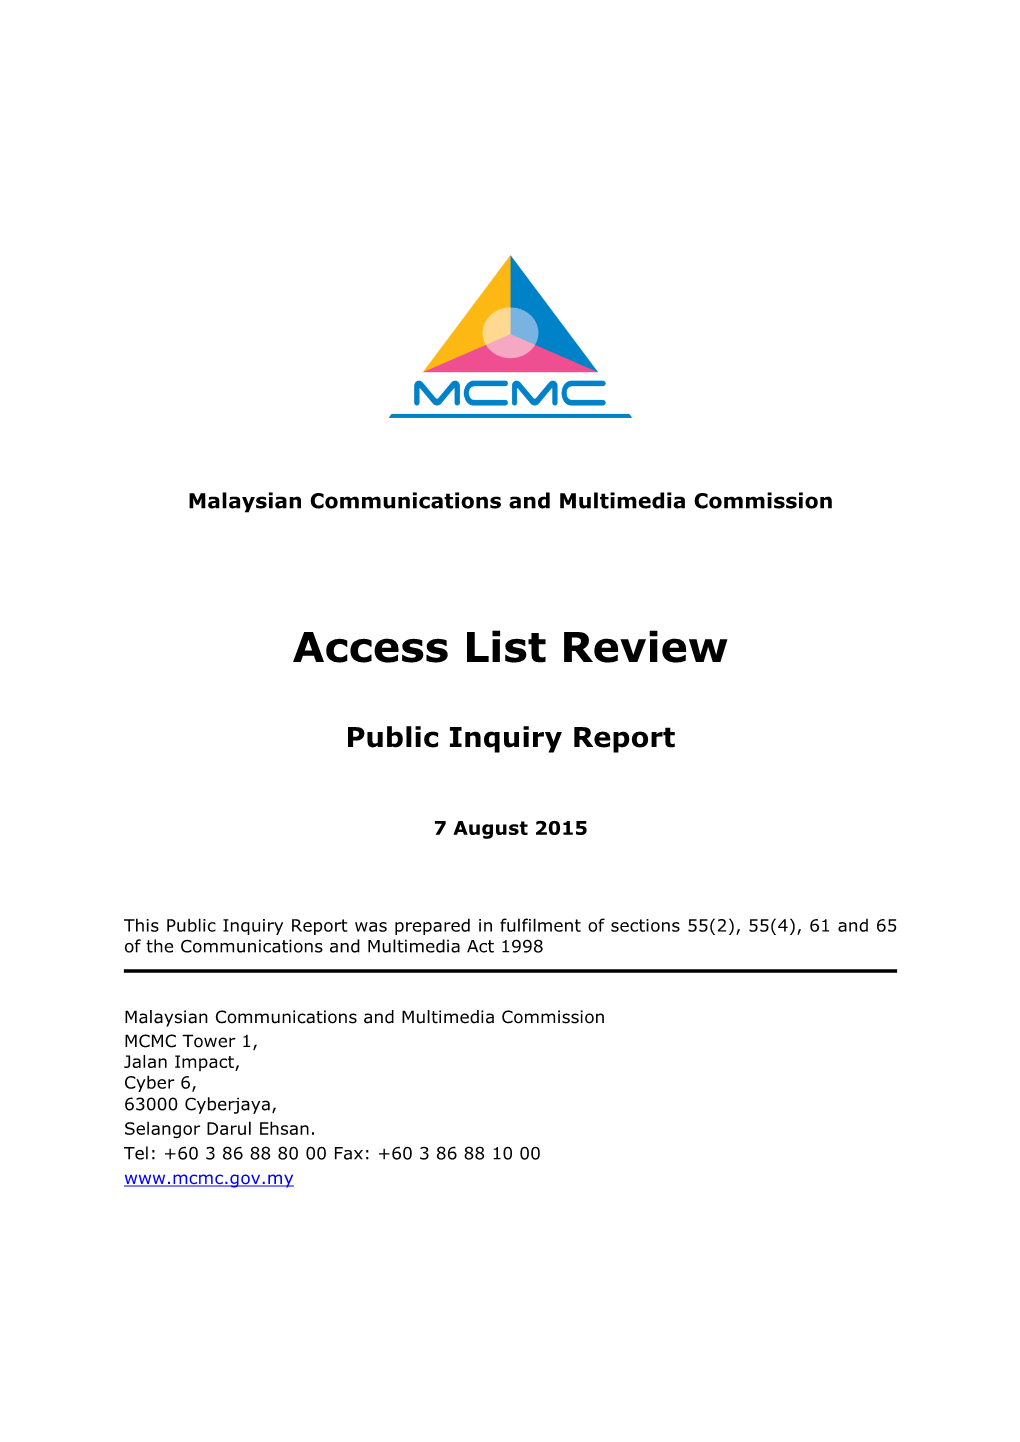 Access List Review